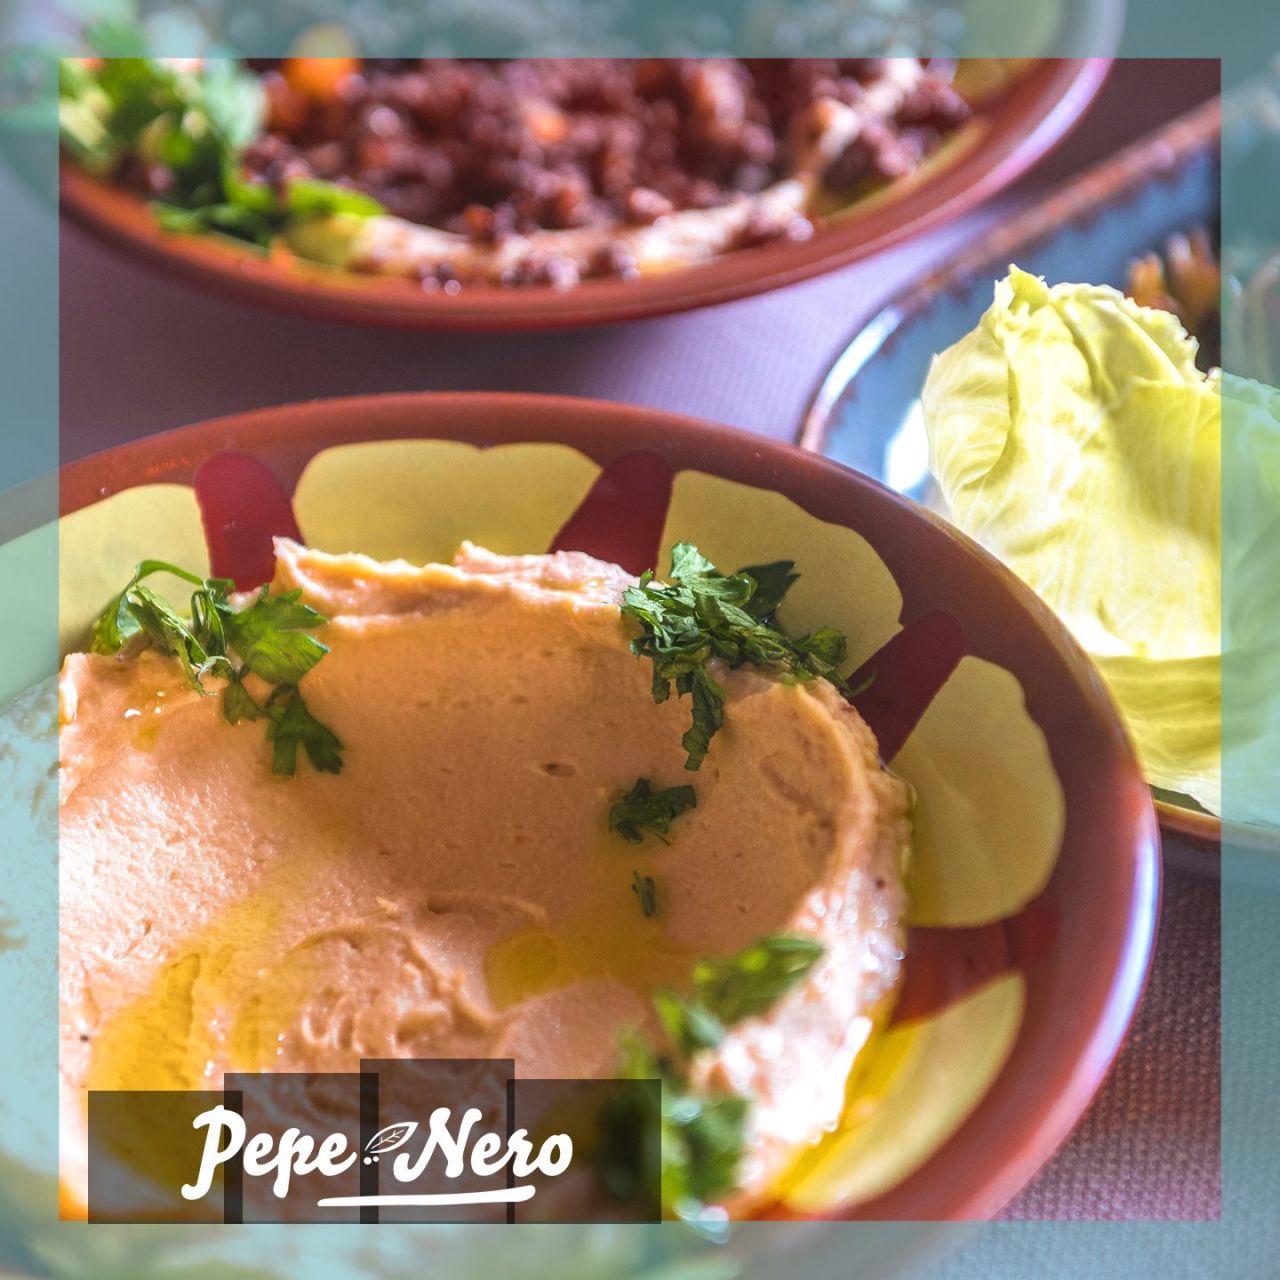 Pepe Nero - Shell Shack & Grill